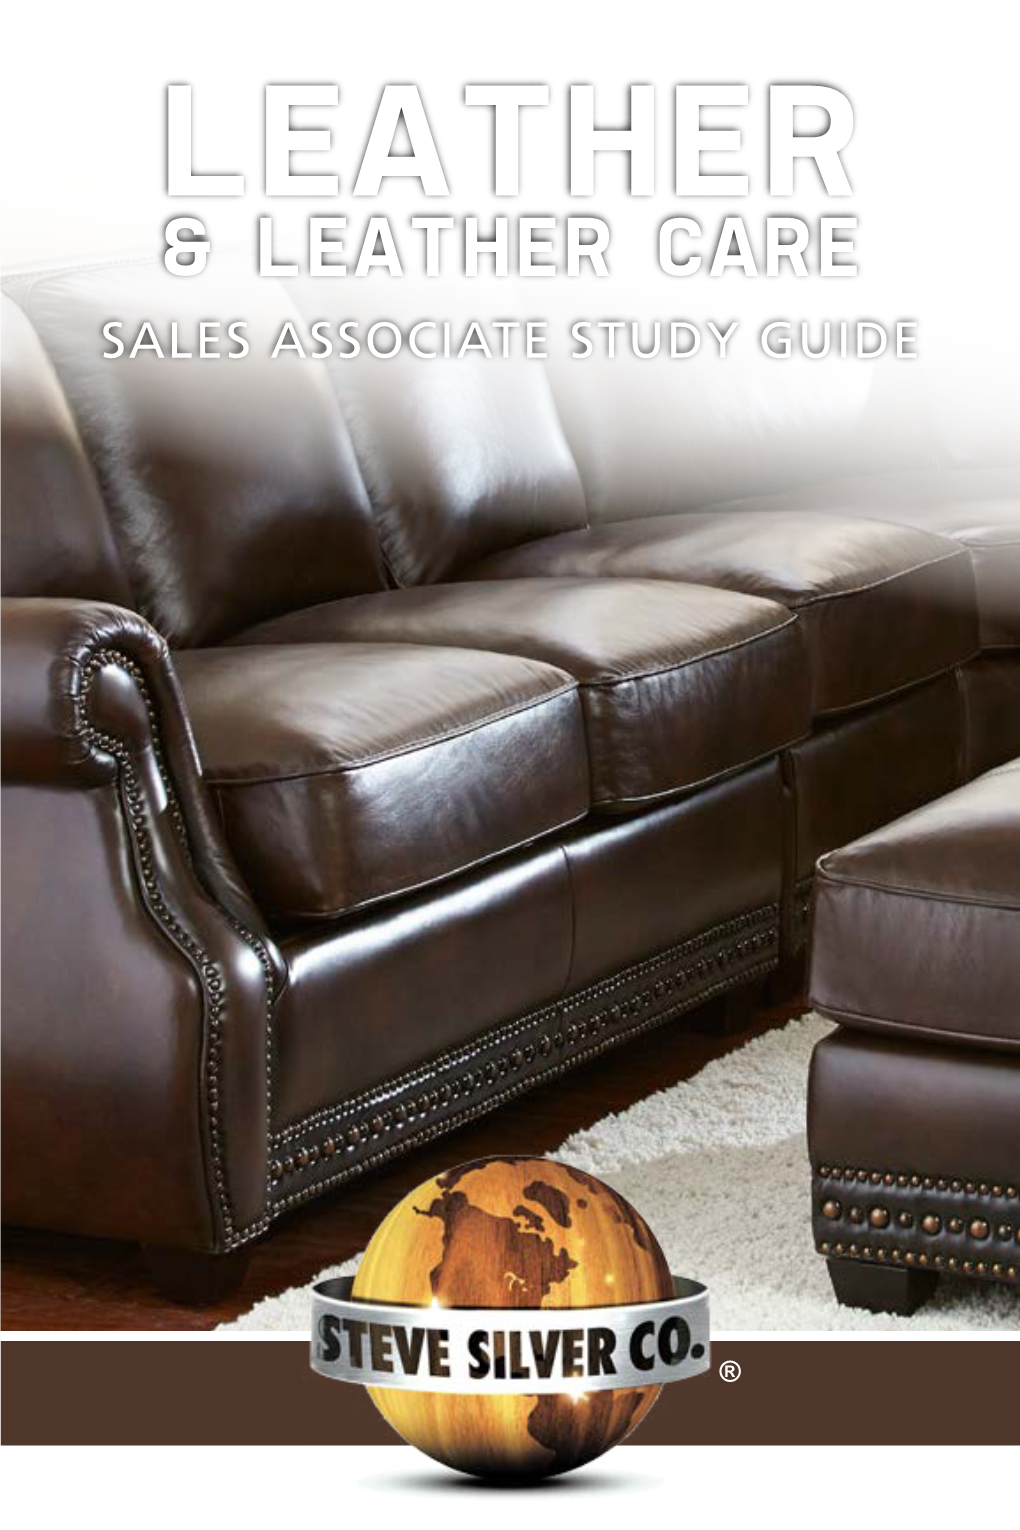 Leather Care Sales Associate Study Guide